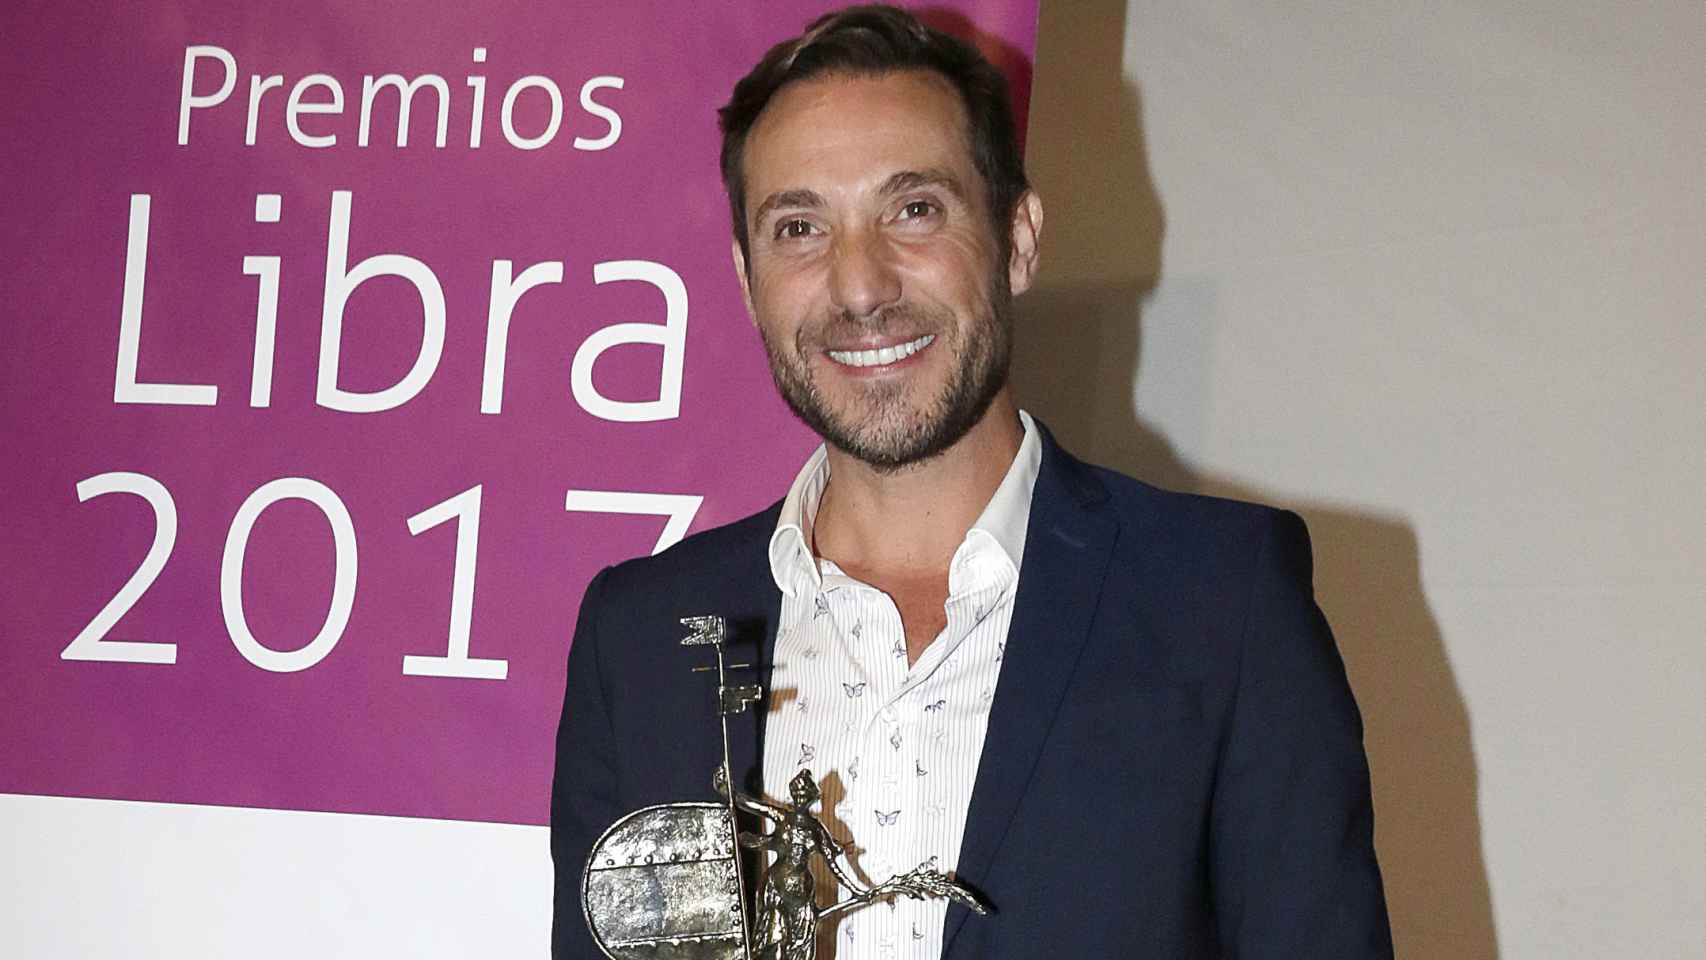 Antonio David, galardonado con el Premio Libra 2017.